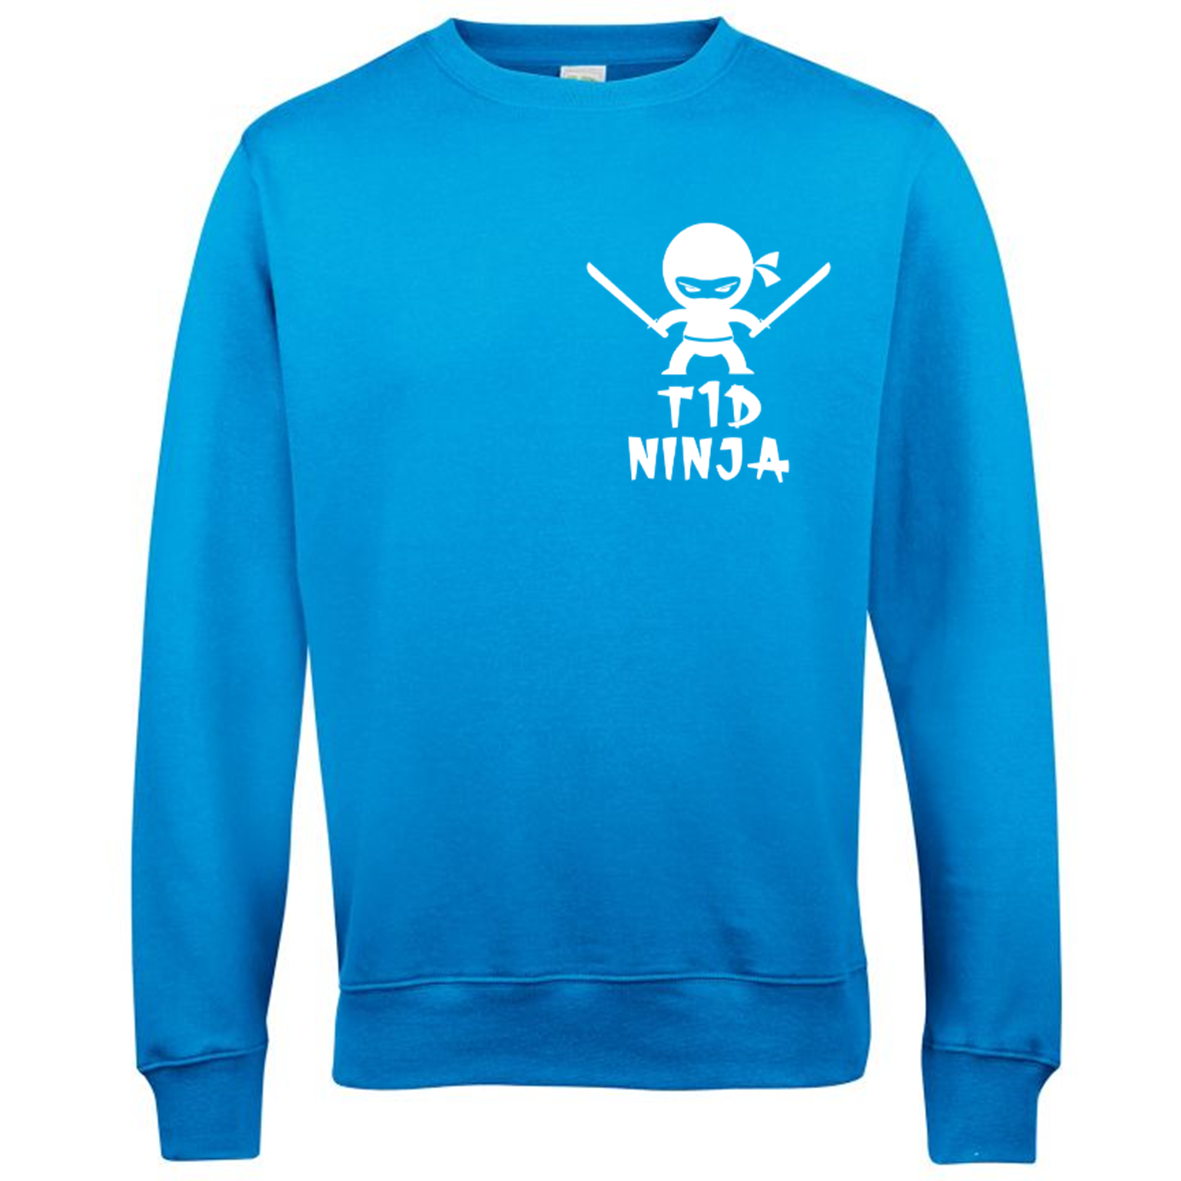 T1D Ninja Sweatshirt